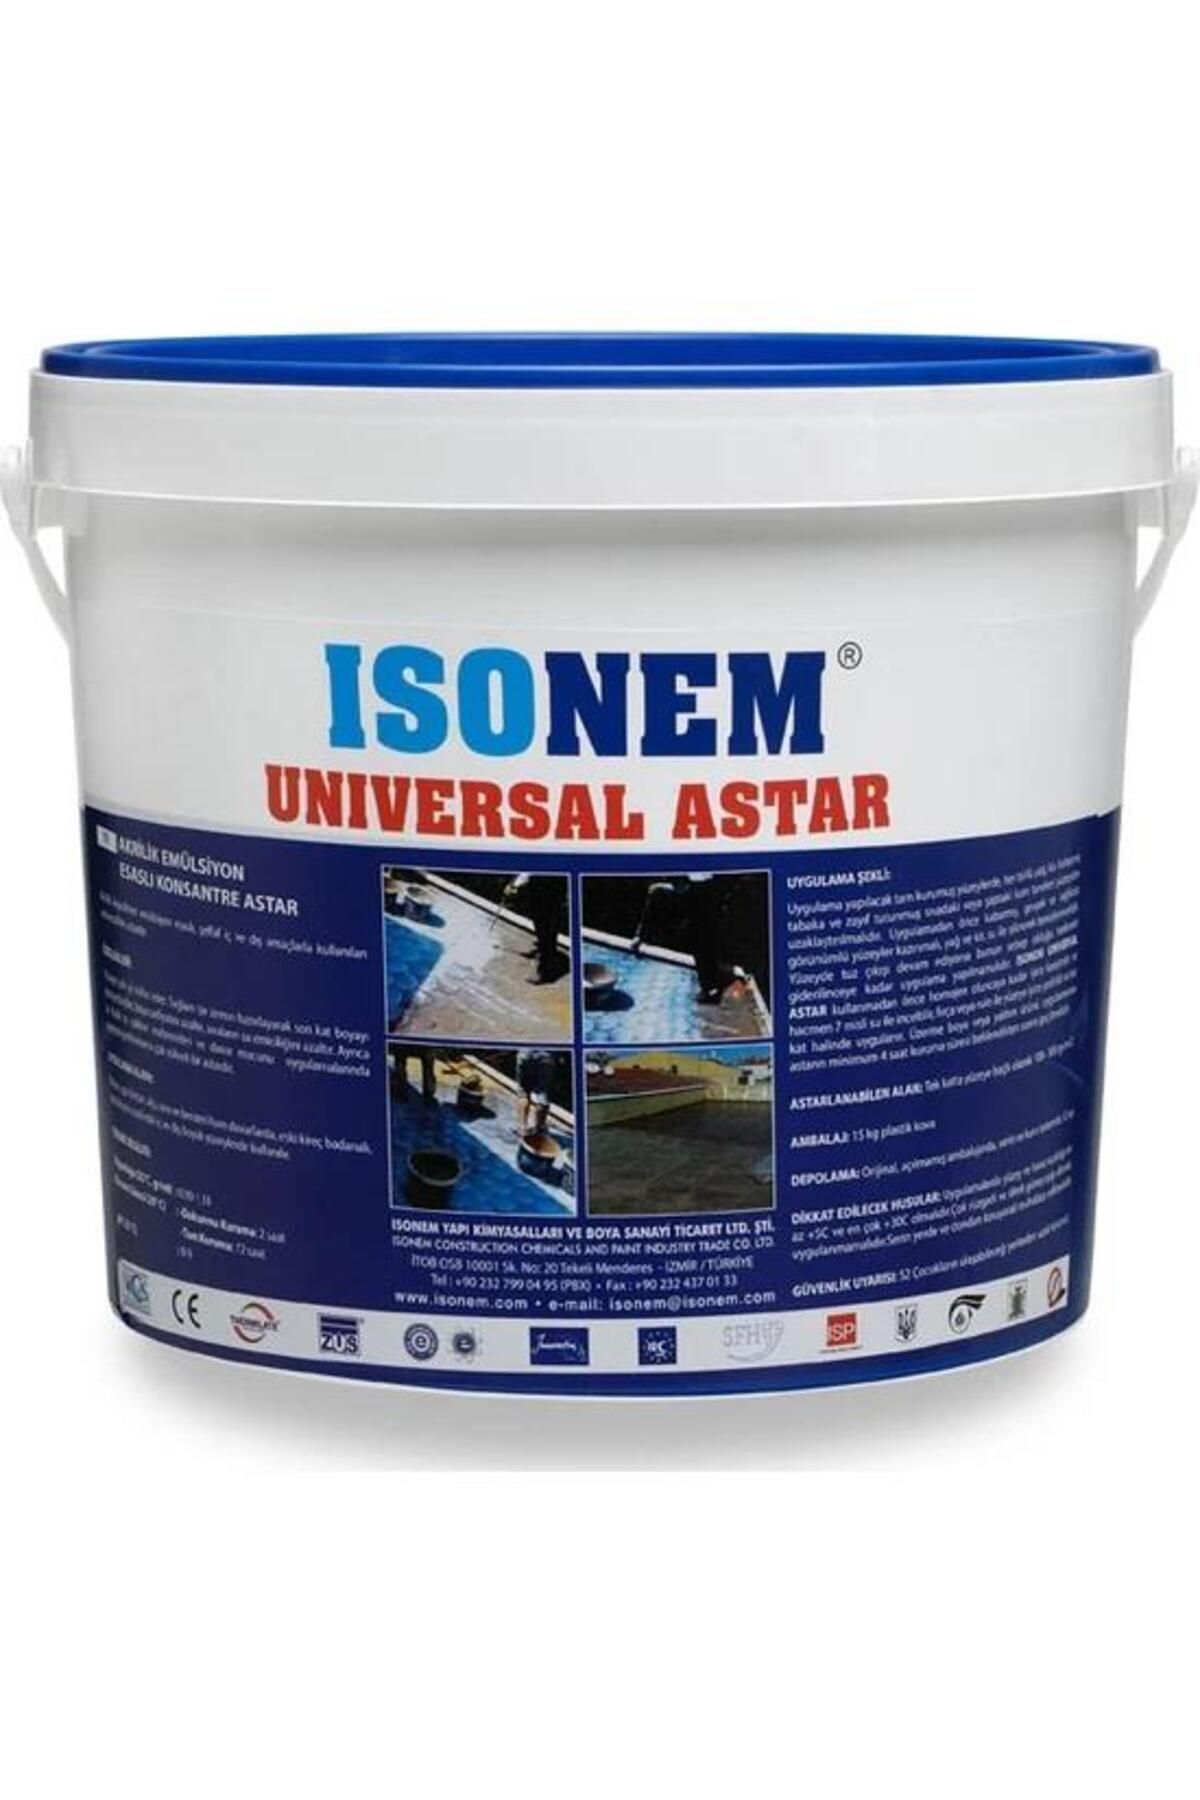 Isonem Universal Astar Akrilik Esaslı 5 Kg